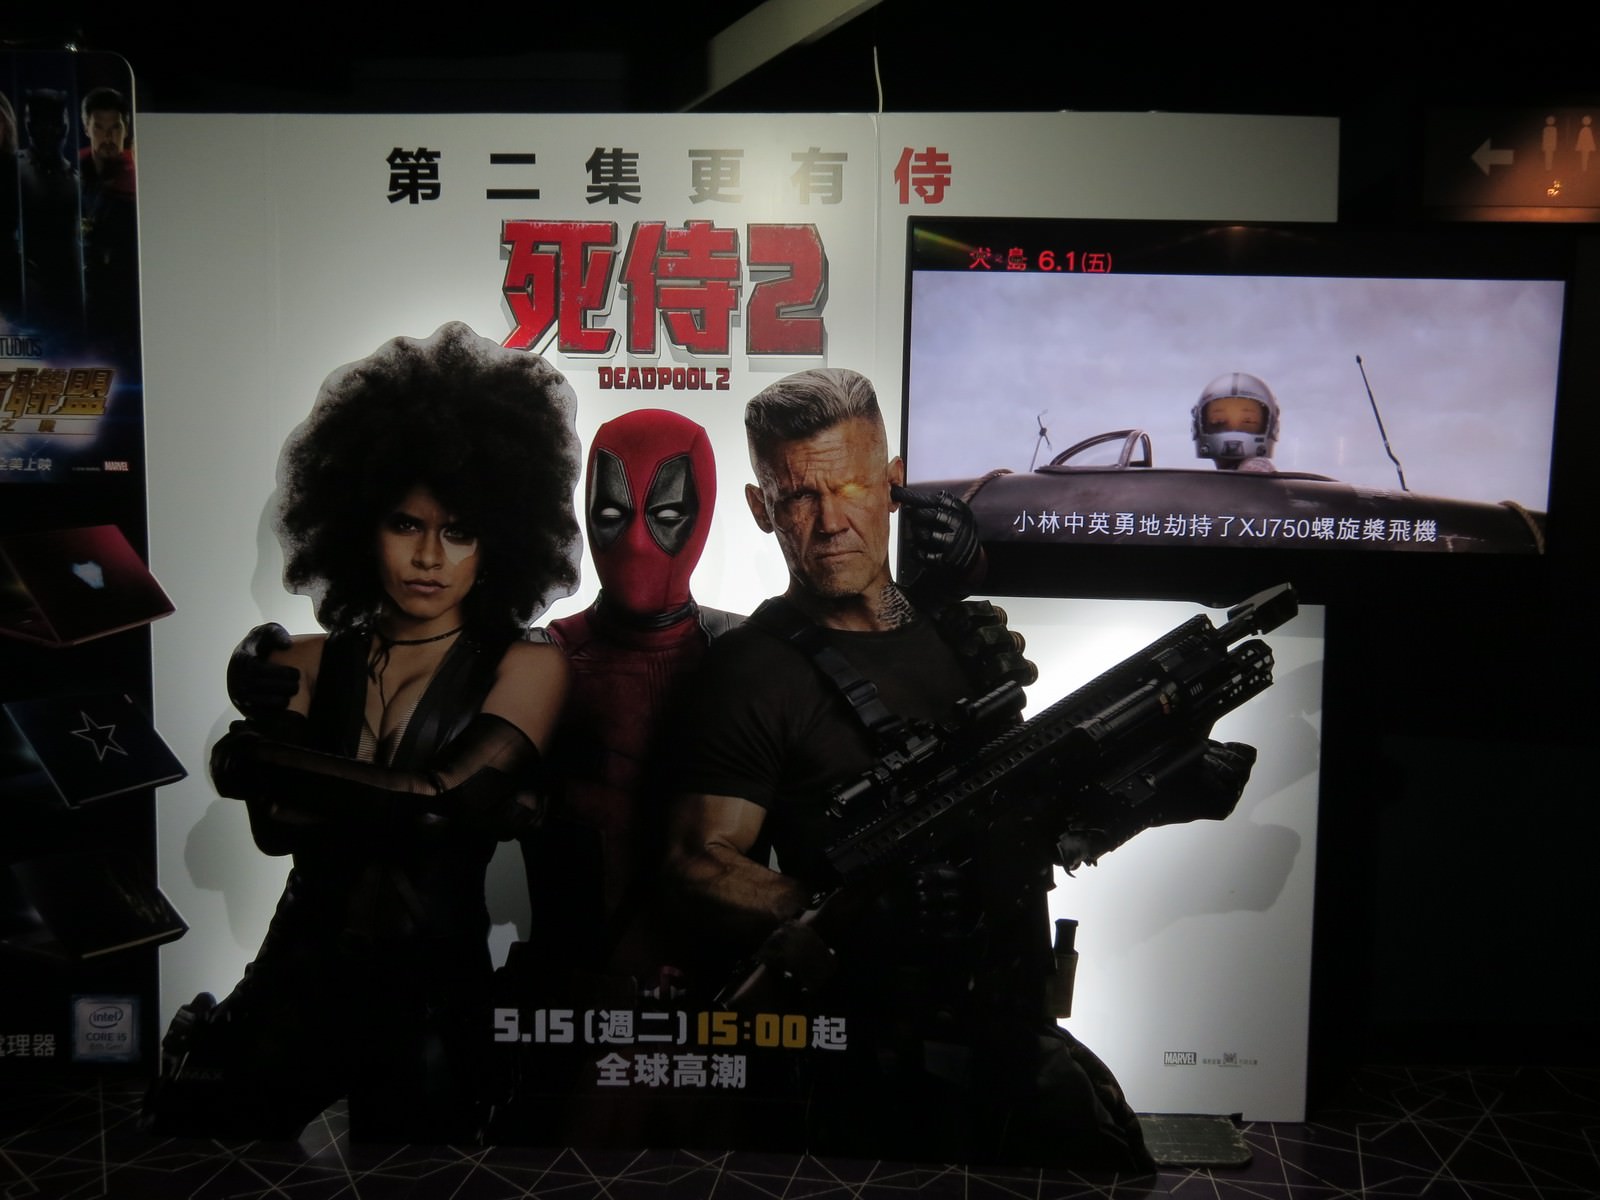 Movie, Deadpool 2(美國) / 死侍2(台.中.港), 廣告看板, 京站威秀